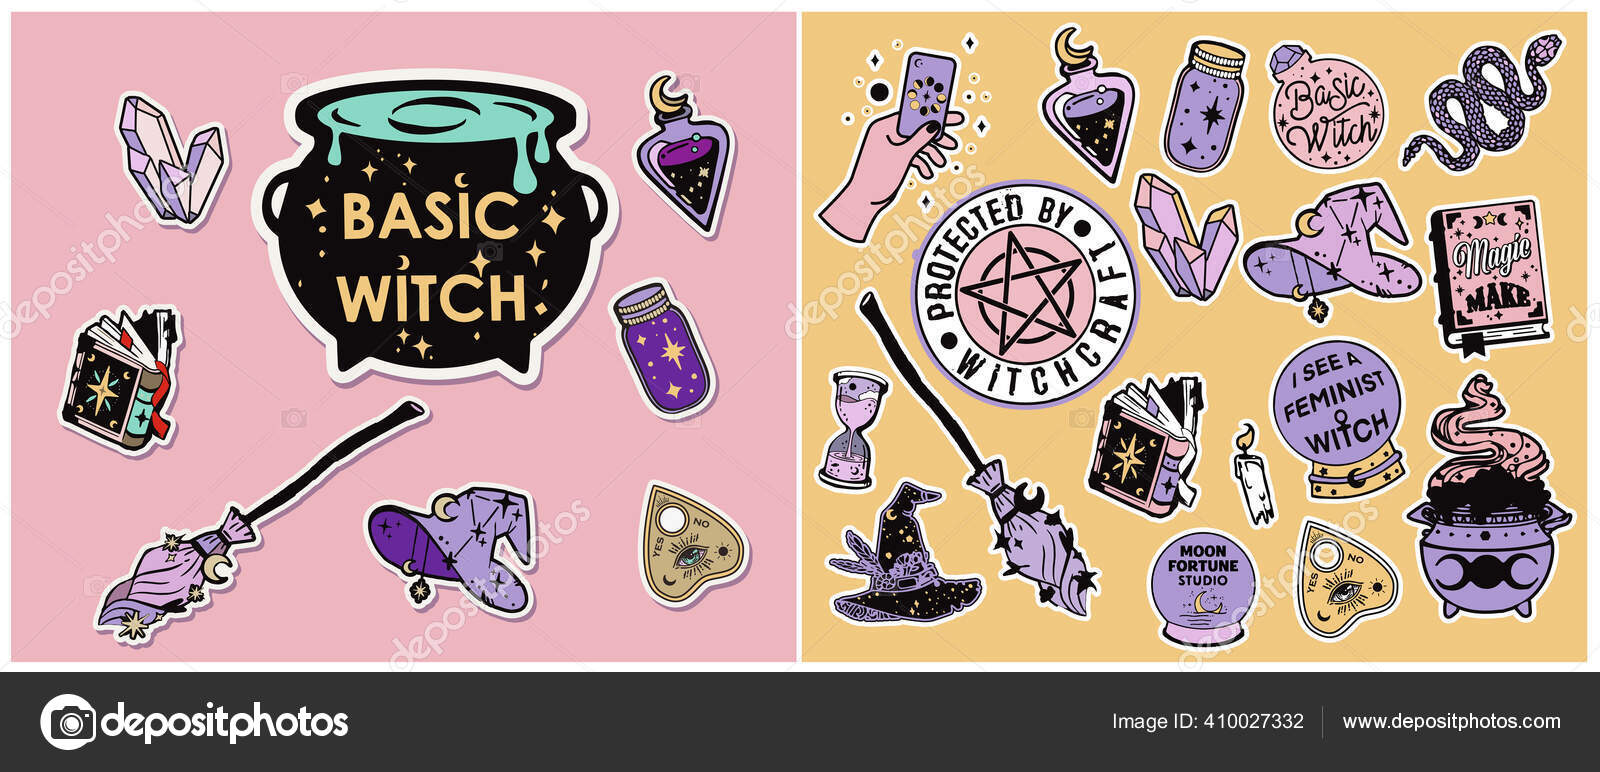 Crystal Witch - Witchcraft - Sticker